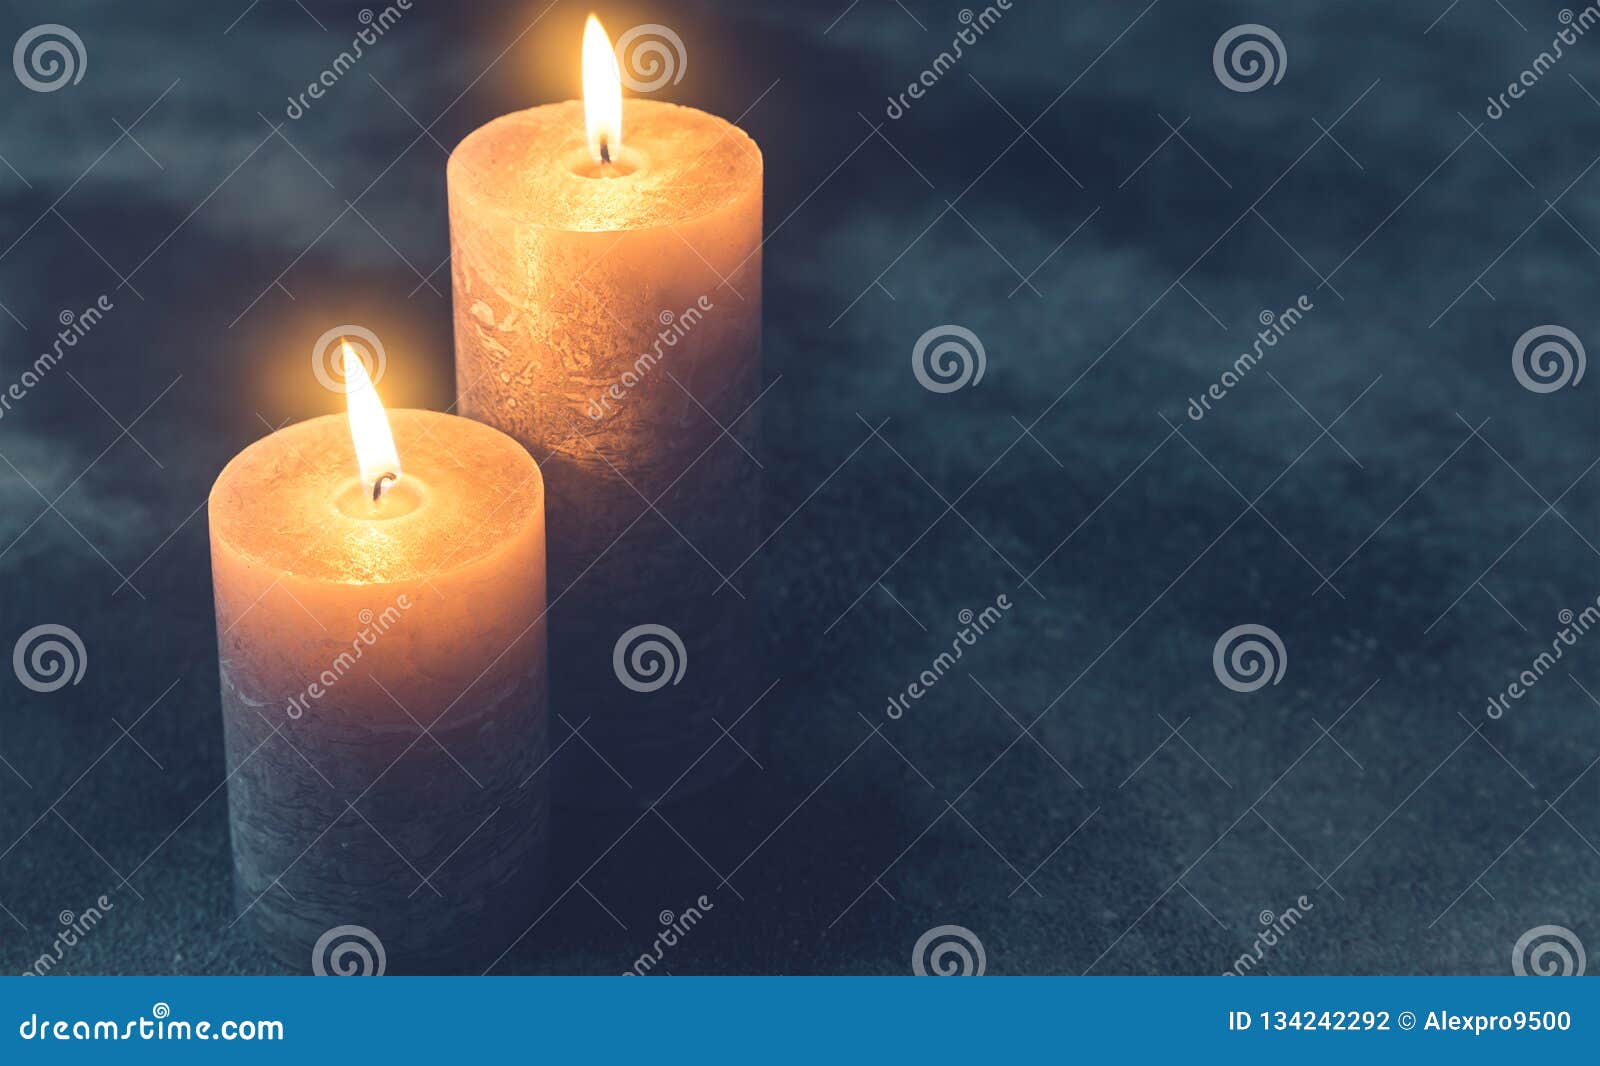 Two Burning Candles on Navy Blue Background Stock Photo - Image of ...